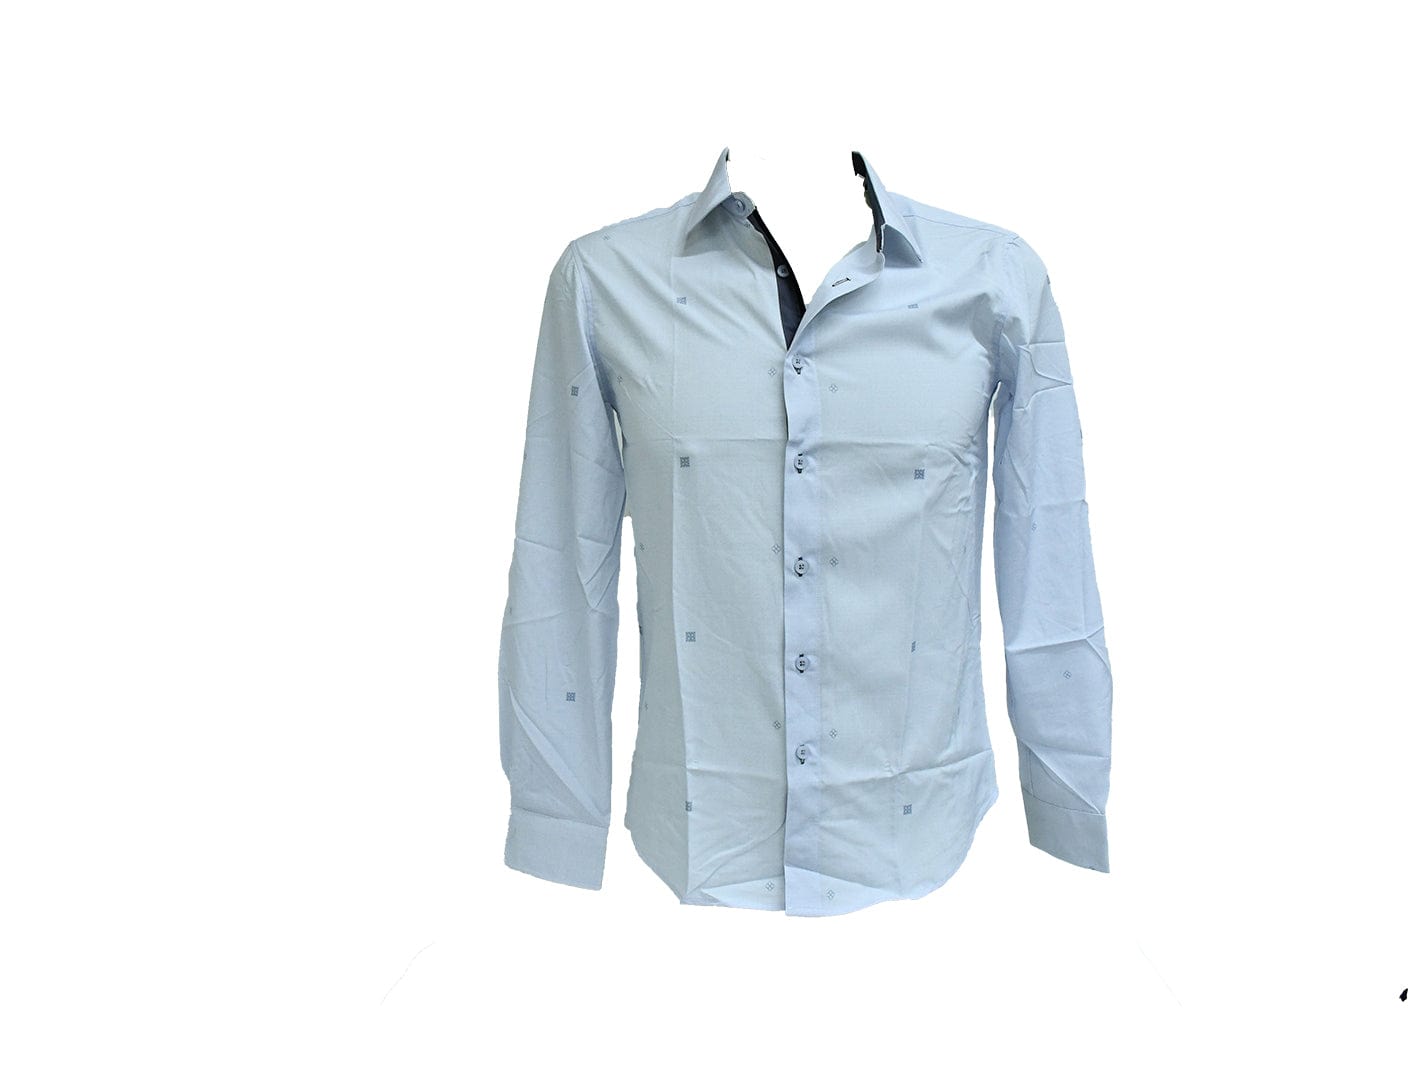 Gucci Men's Slim Fit Light Blue Long Sleeve Dress Shirt